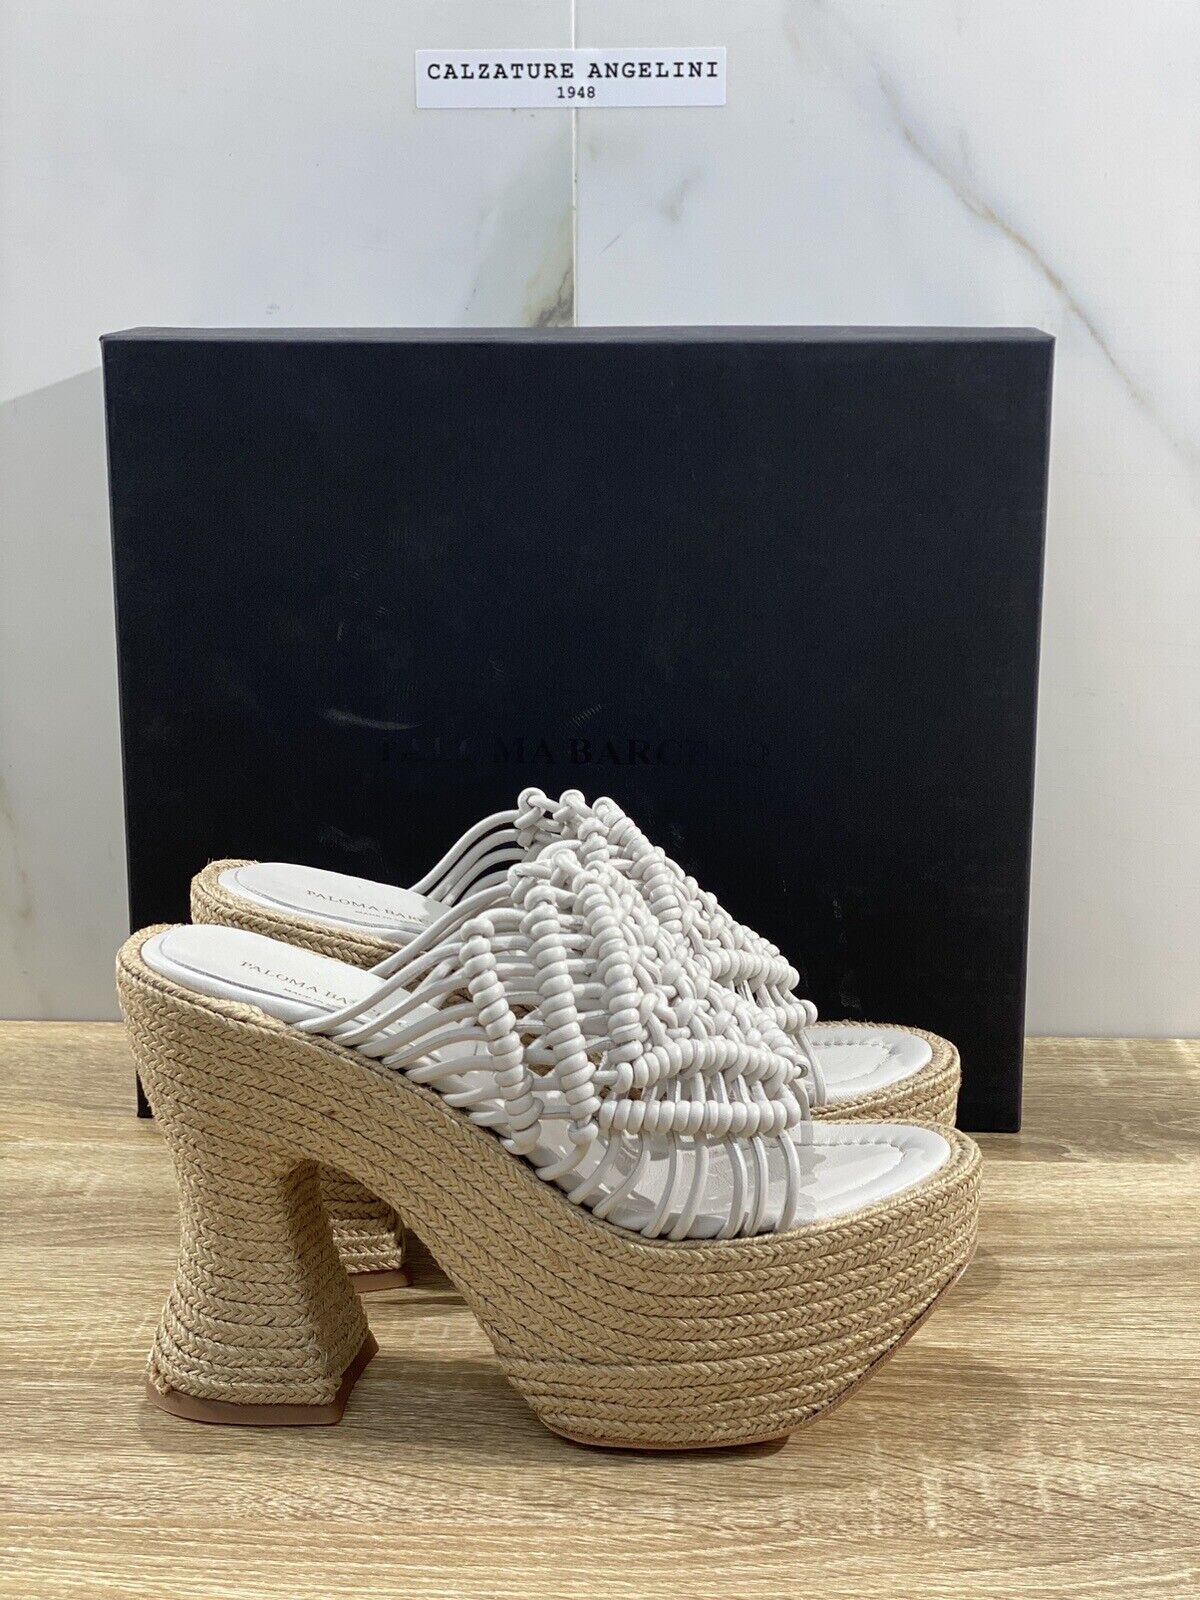 Paloma BARCELO’ Sandalo Donna Salma Pelle White Luxury Shoes 38